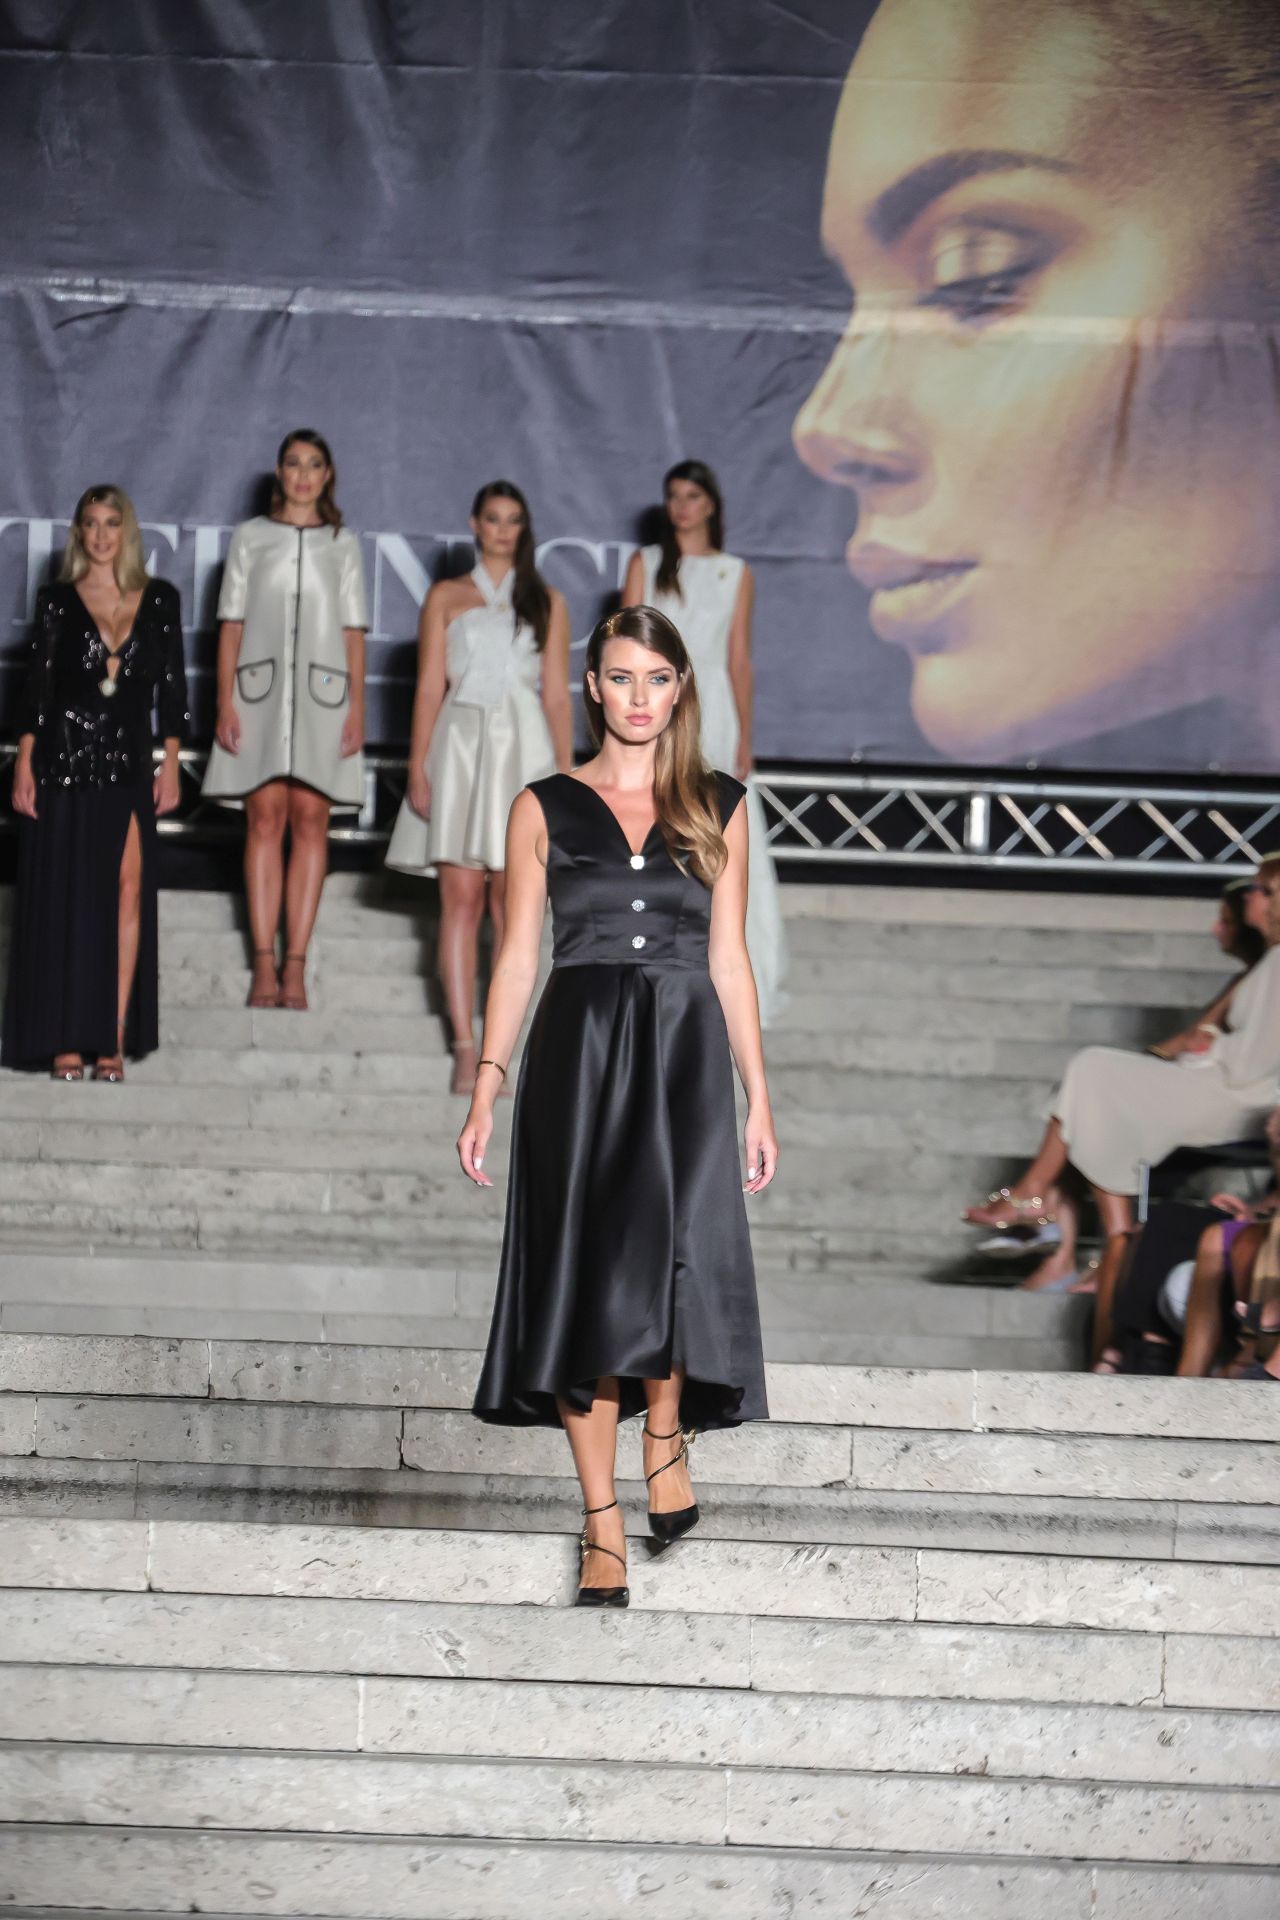 Croatia's biggest fashion event is held again on Rijeka steps 